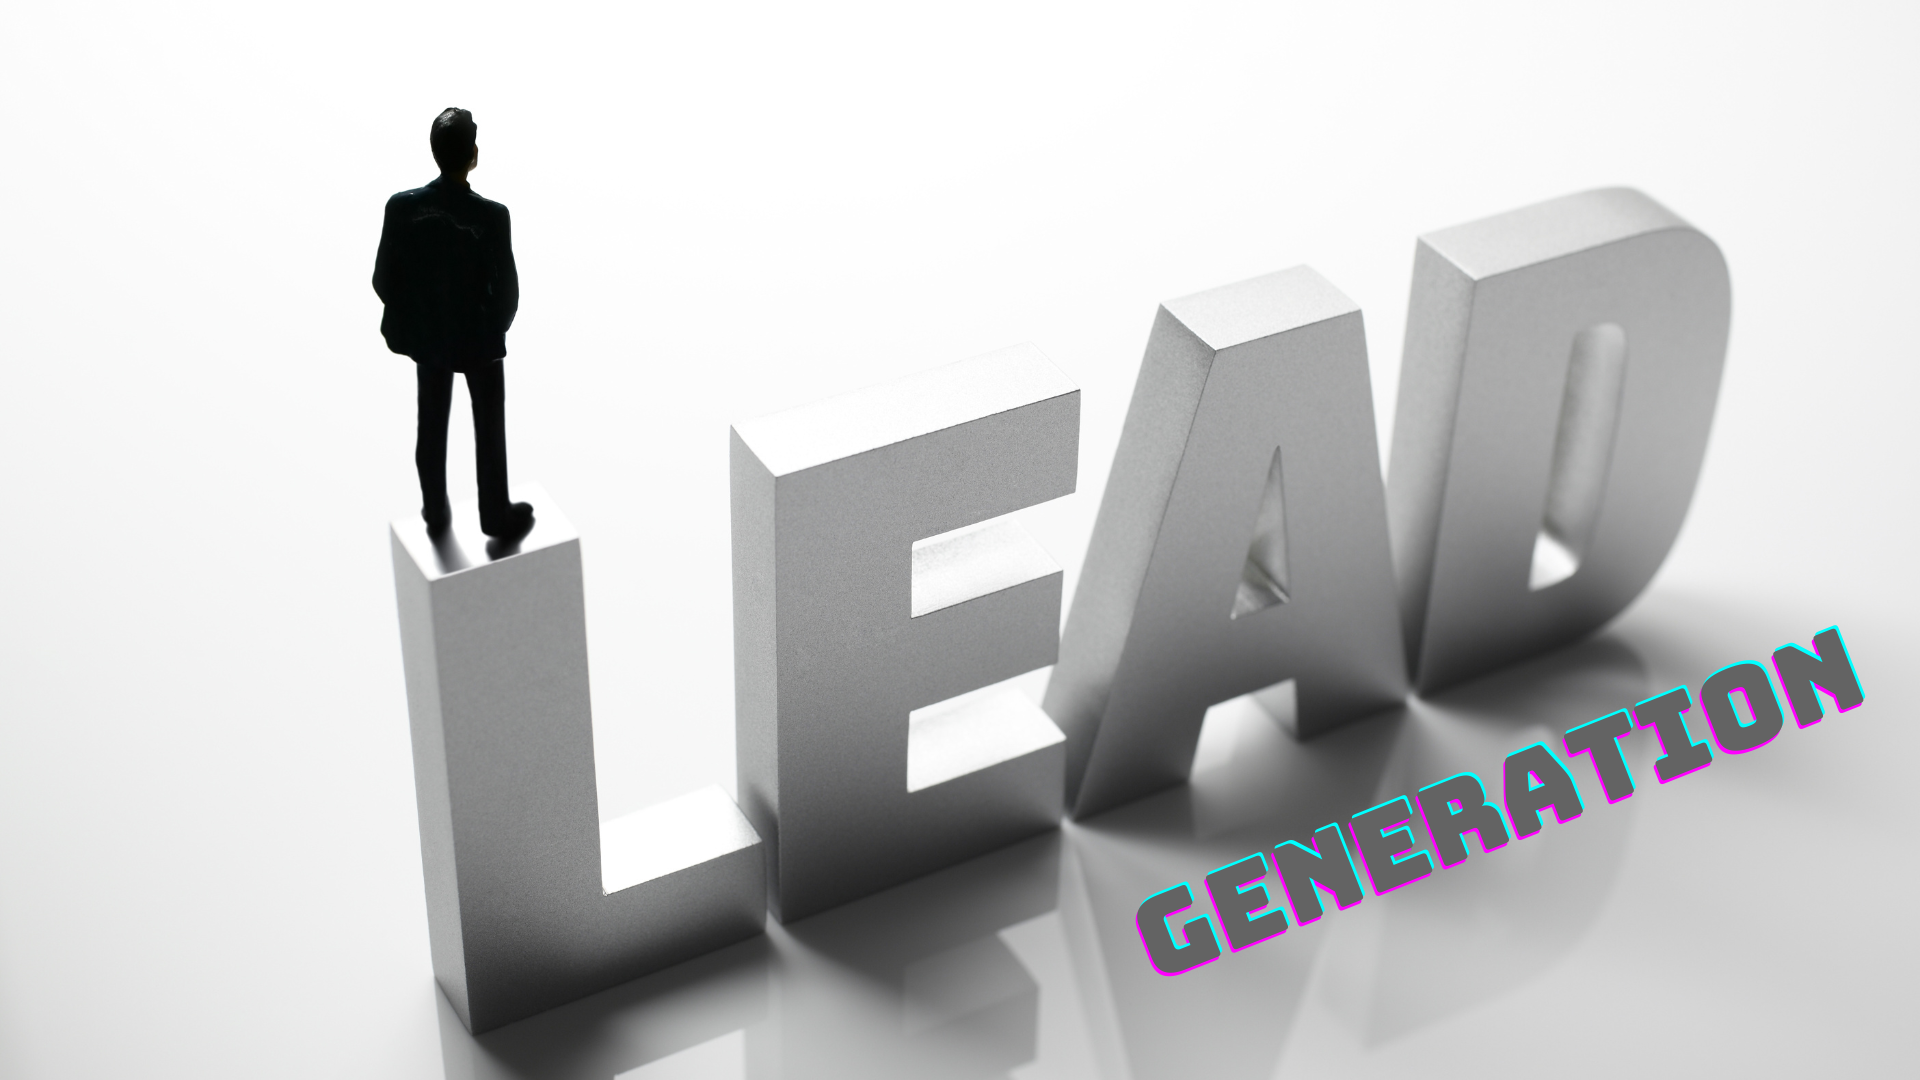 Leadfoxy vs. Salesforce Sales Cloud: Unveiling the Ultimate Lead Generation Software Showdown